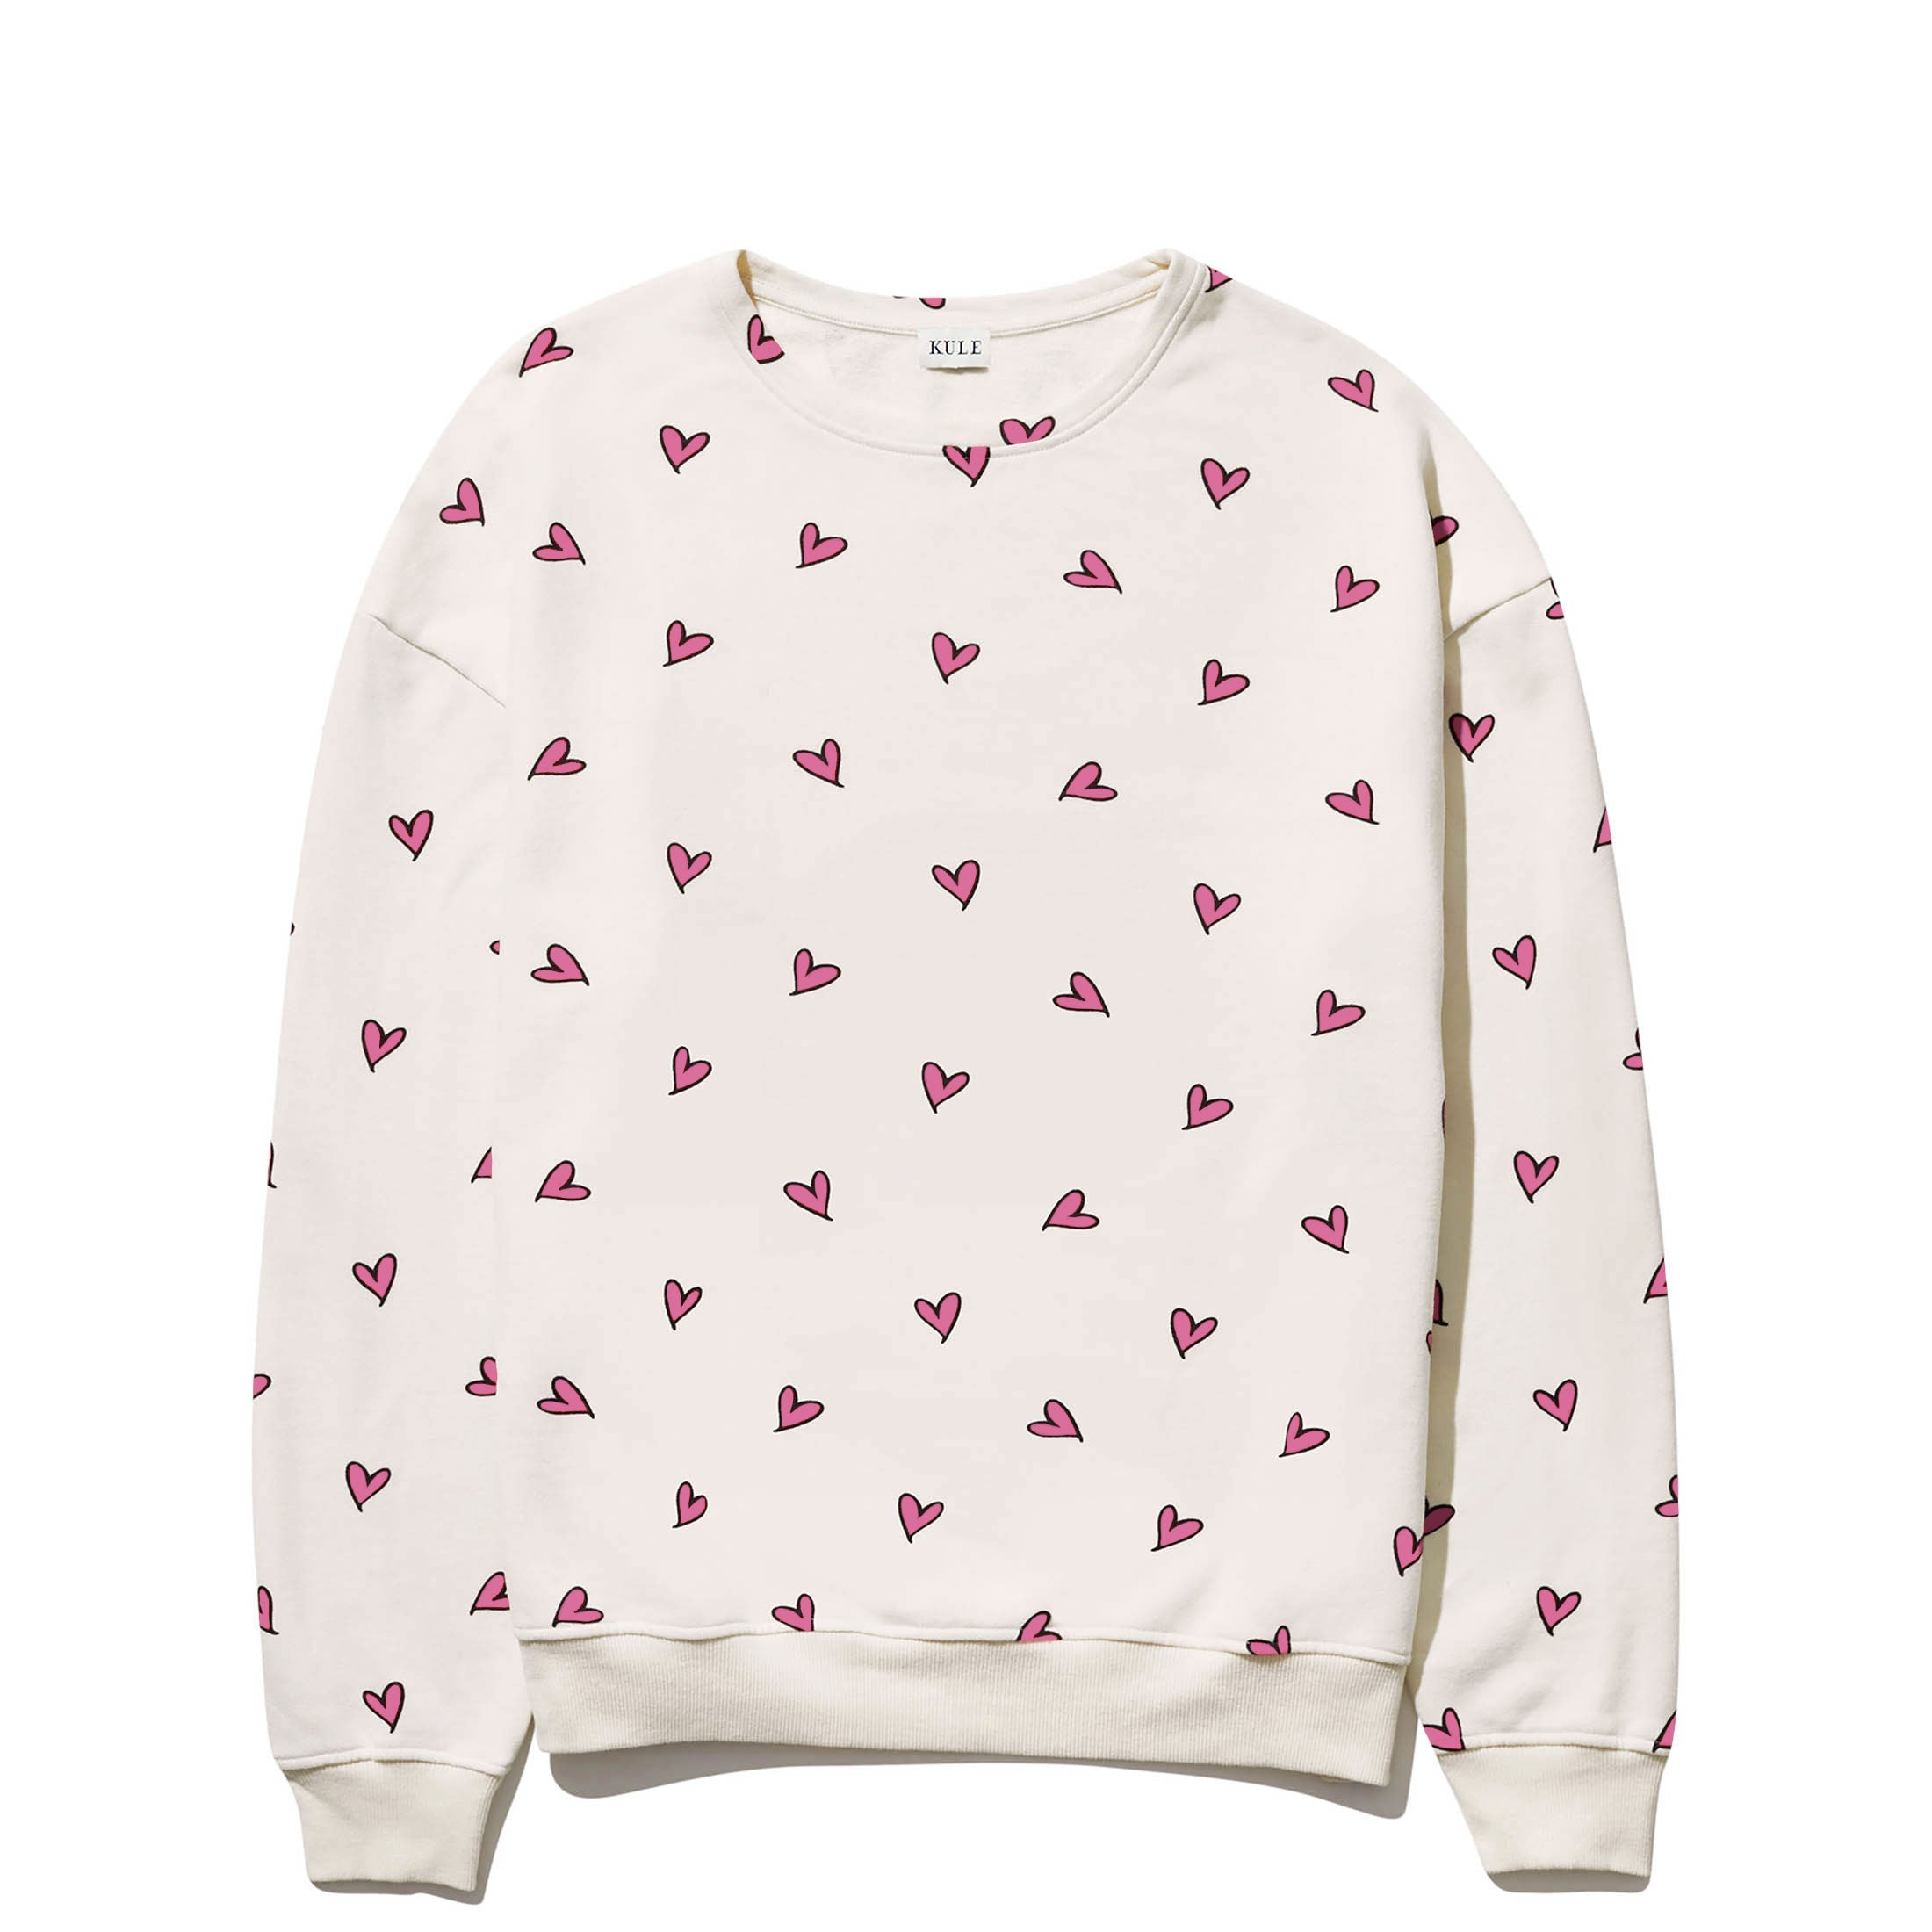 The Oversized All Over Heart Sweatshirt - Cream/Pink